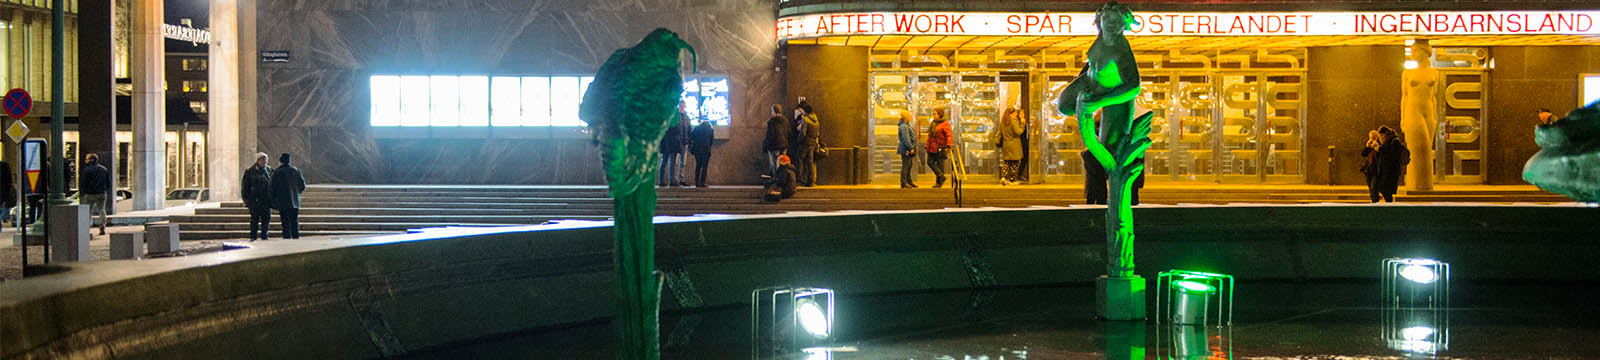 Göteborgs stadsteater exteriör foto kvällstid